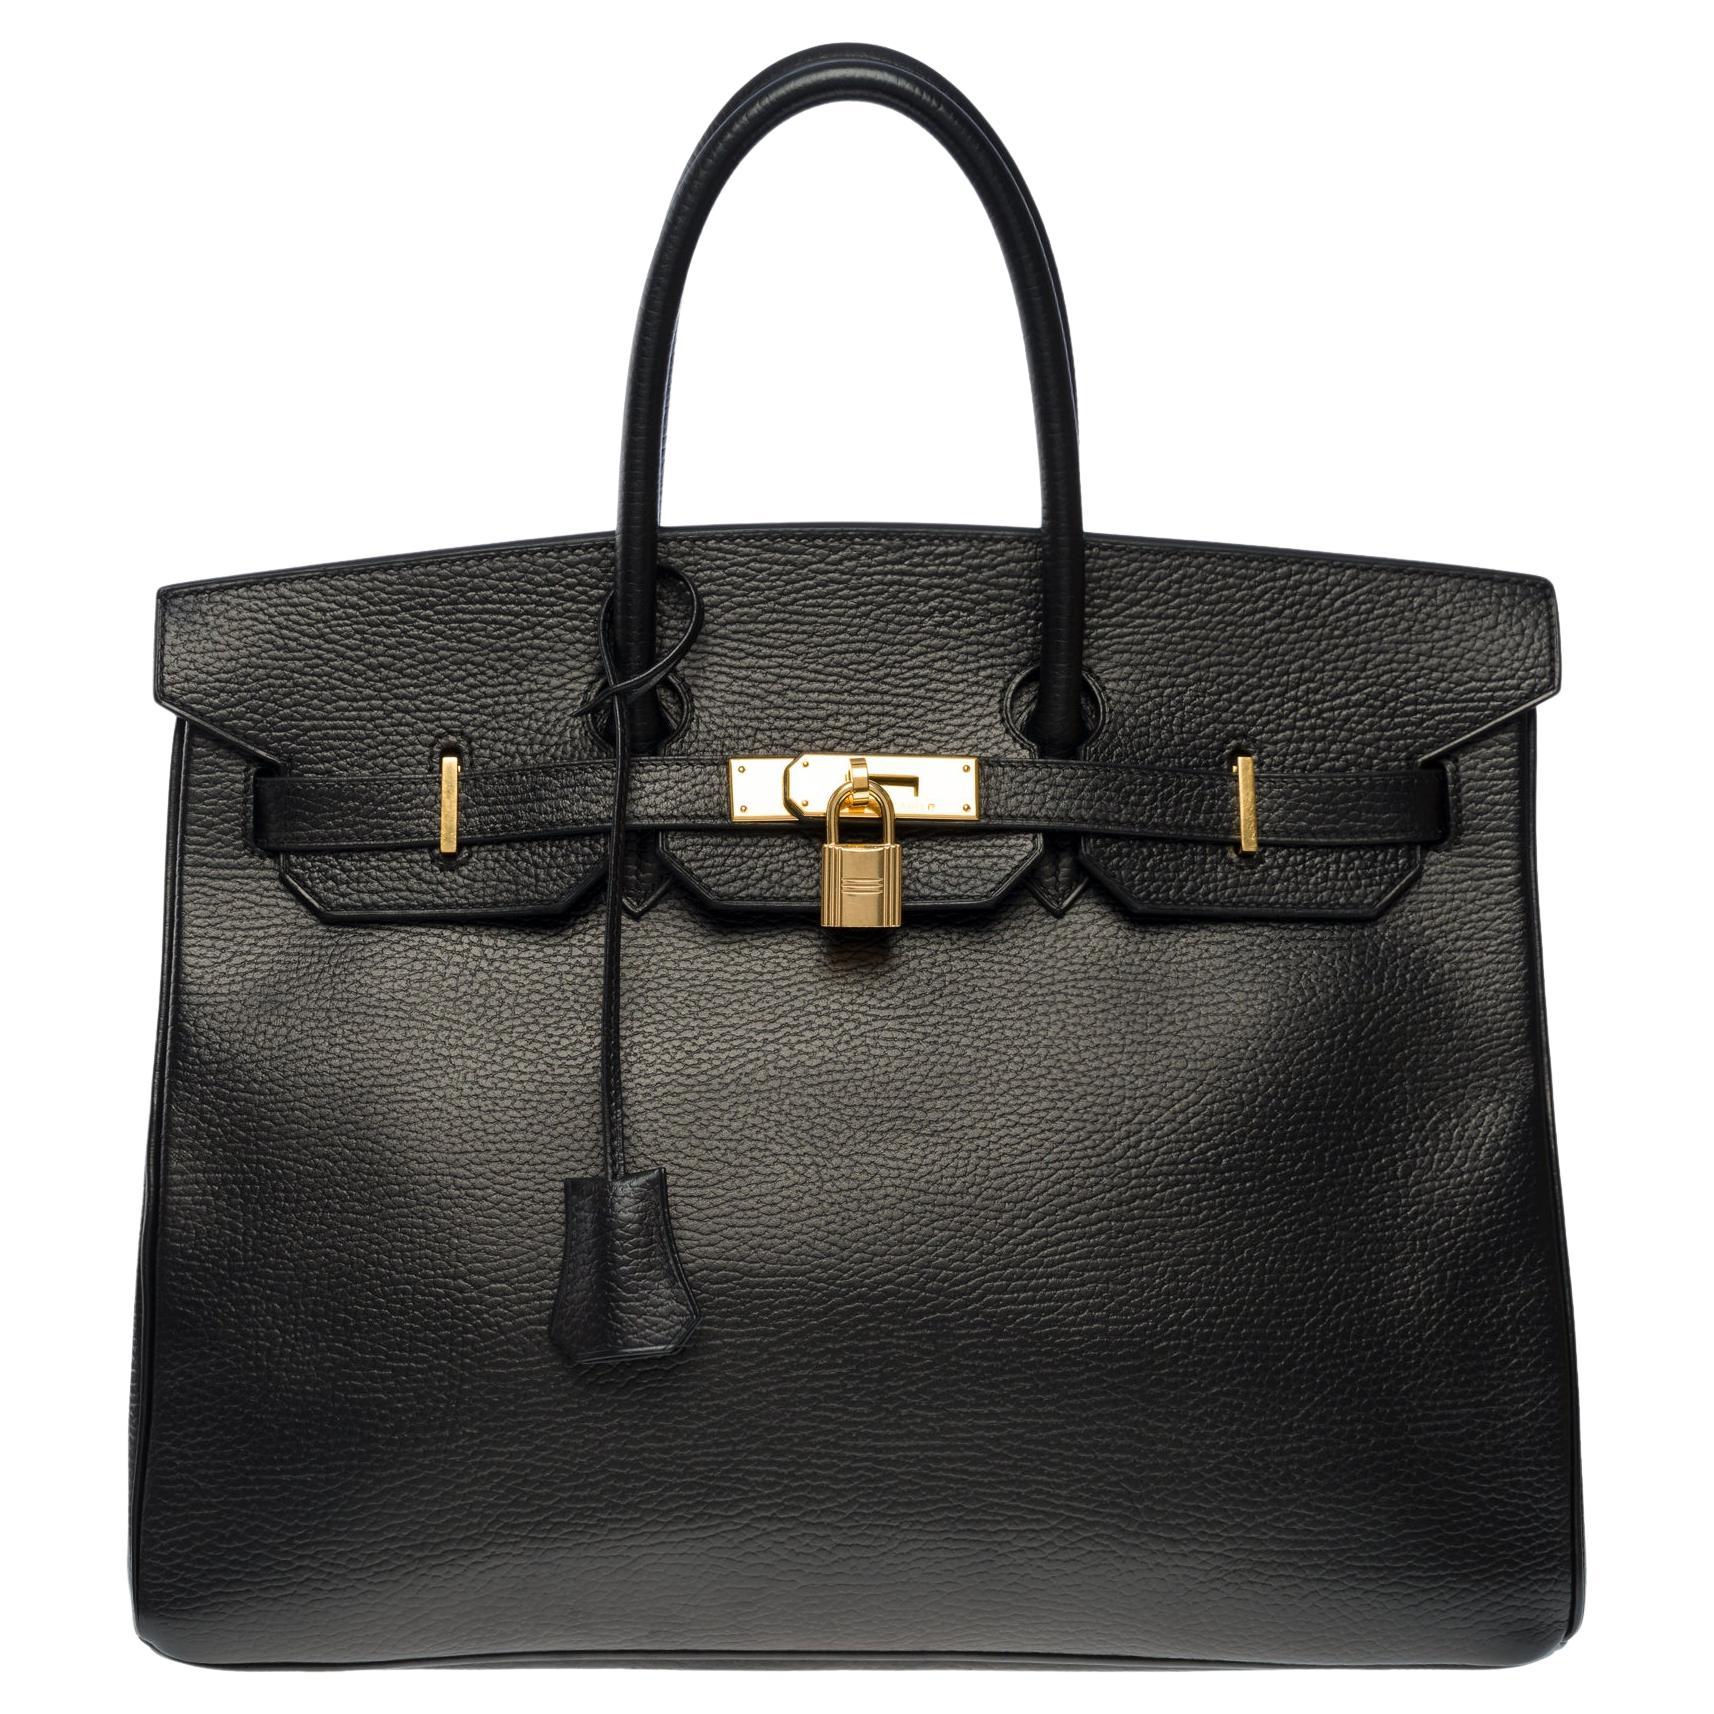 Amazing Hermès Birkin 35 handbag in black Togo leather, GHW